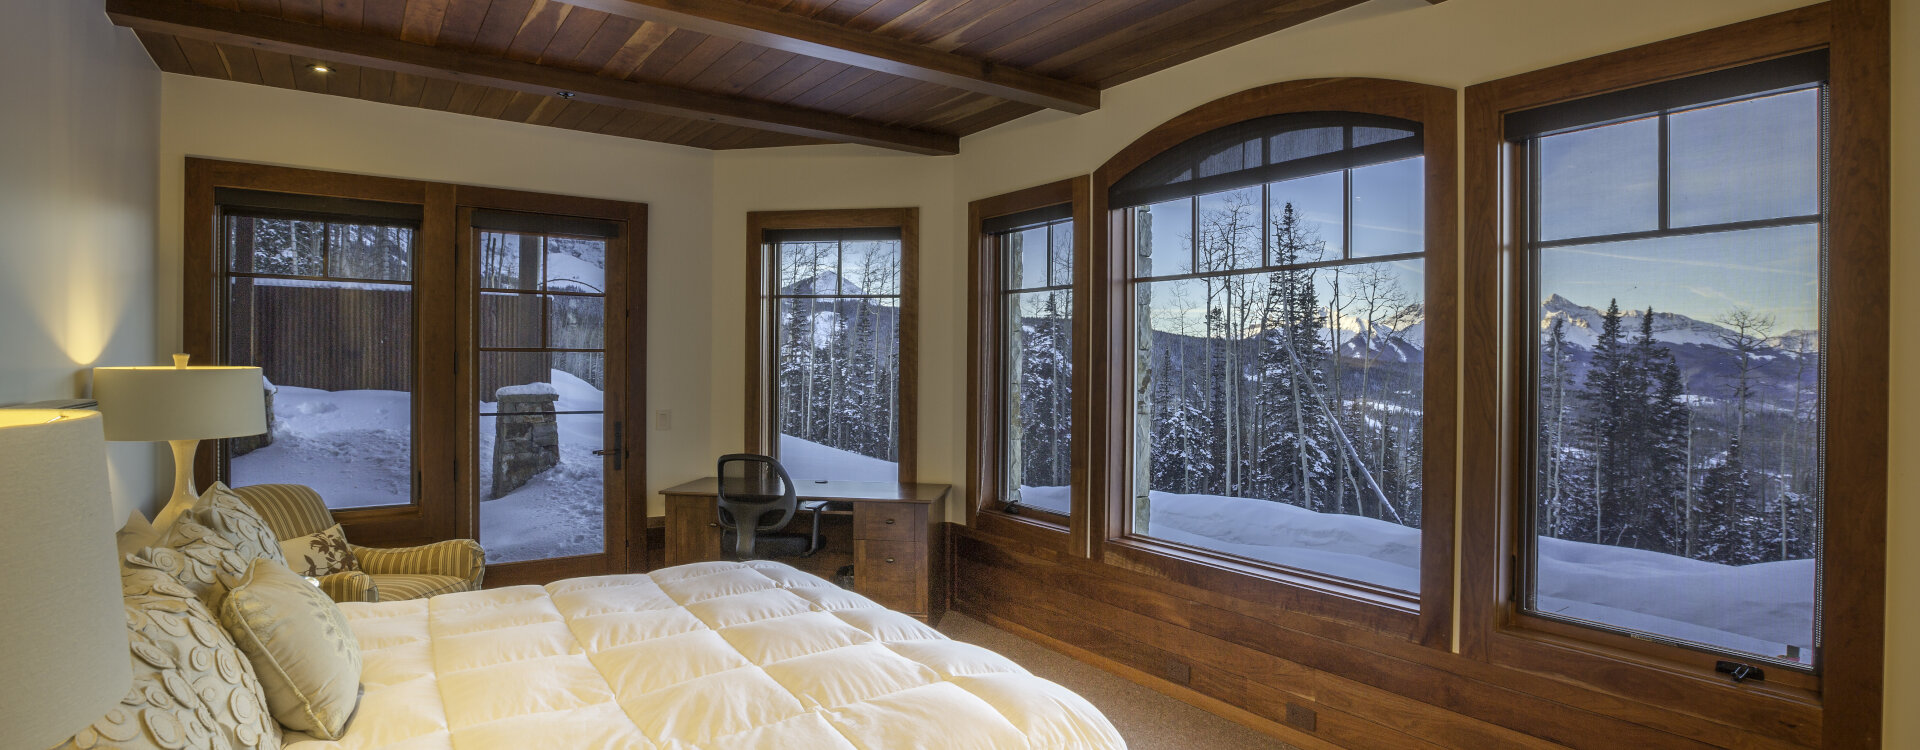 8.01-telluride-cabin-on-the-ridge-guest-bedroom-1